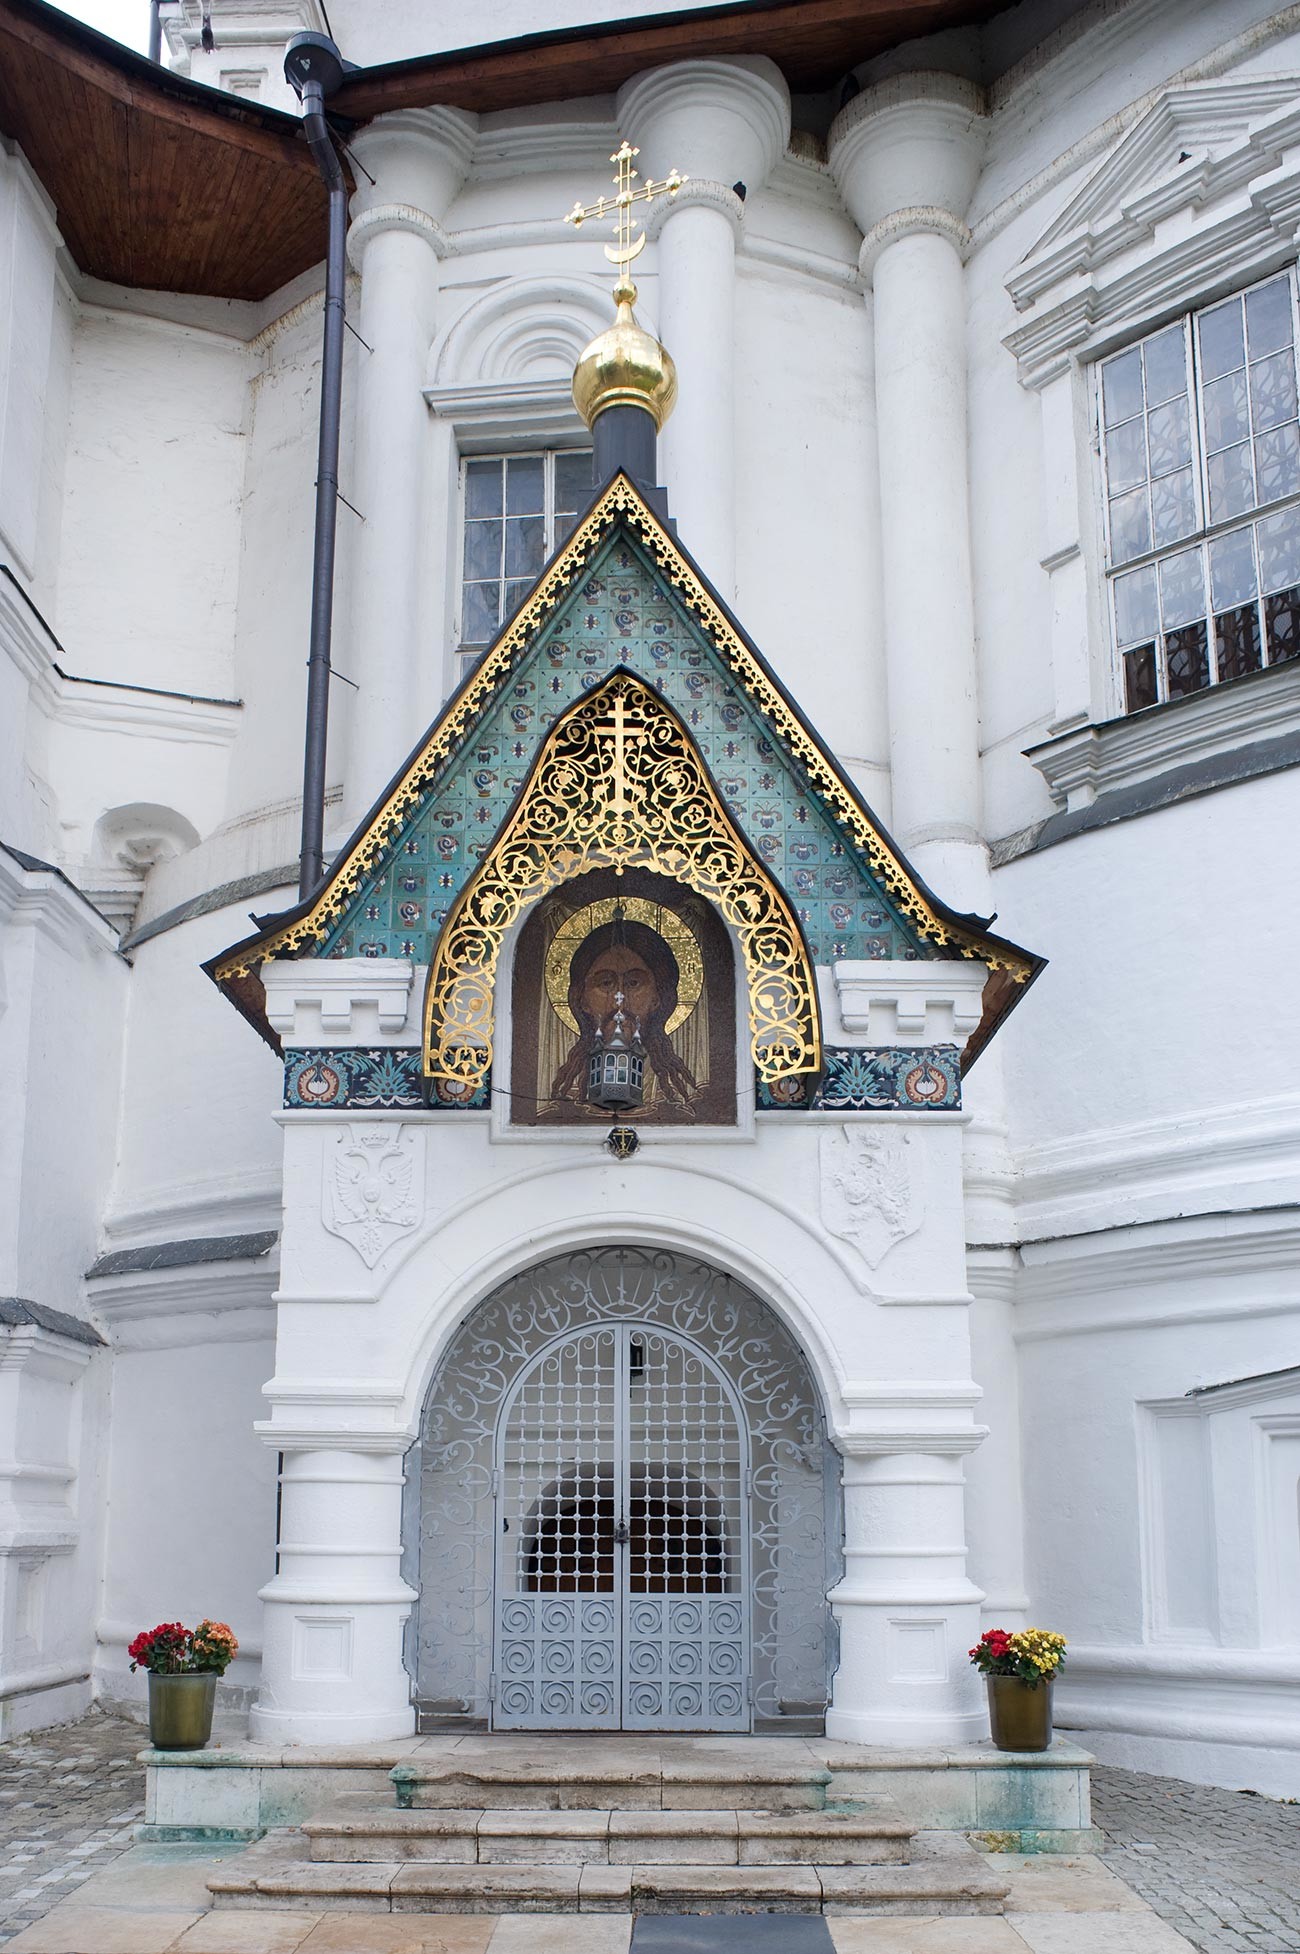 Novospassky Monastery, Transfiguration Cathedral. East facade with original entrance to Romanov burial crypt. August 18, 2013